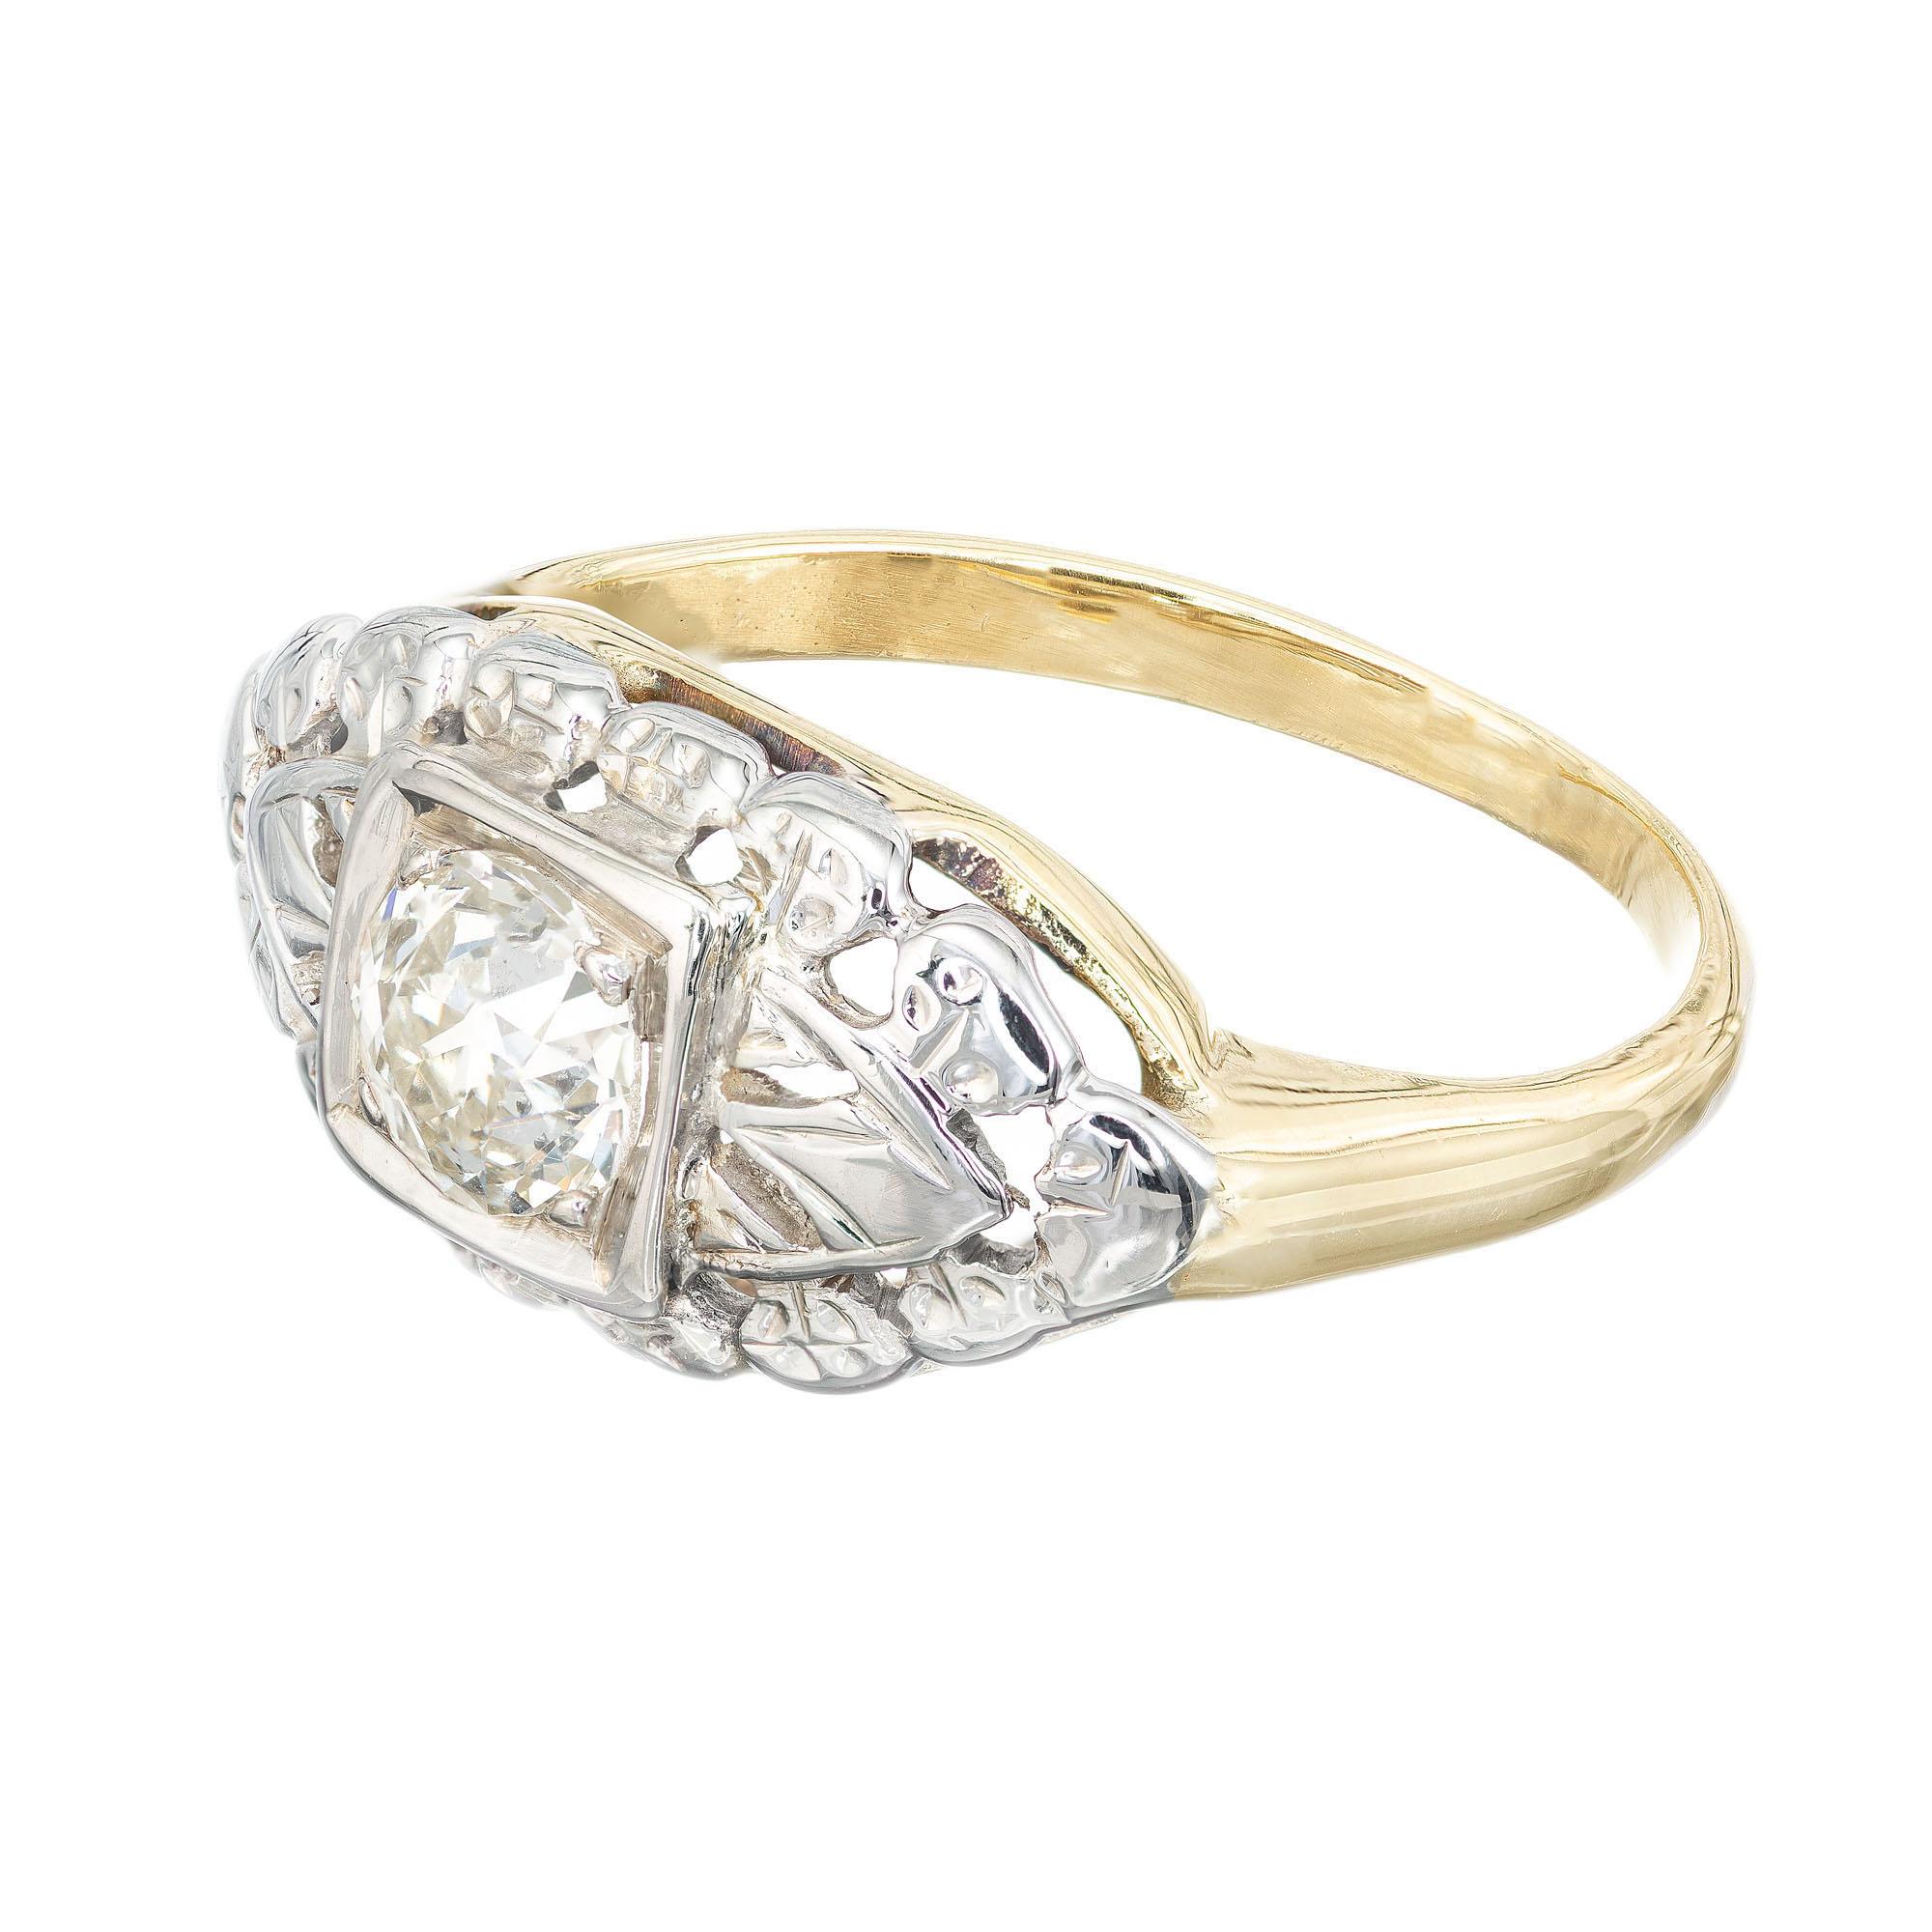 .47 carat diamond ring